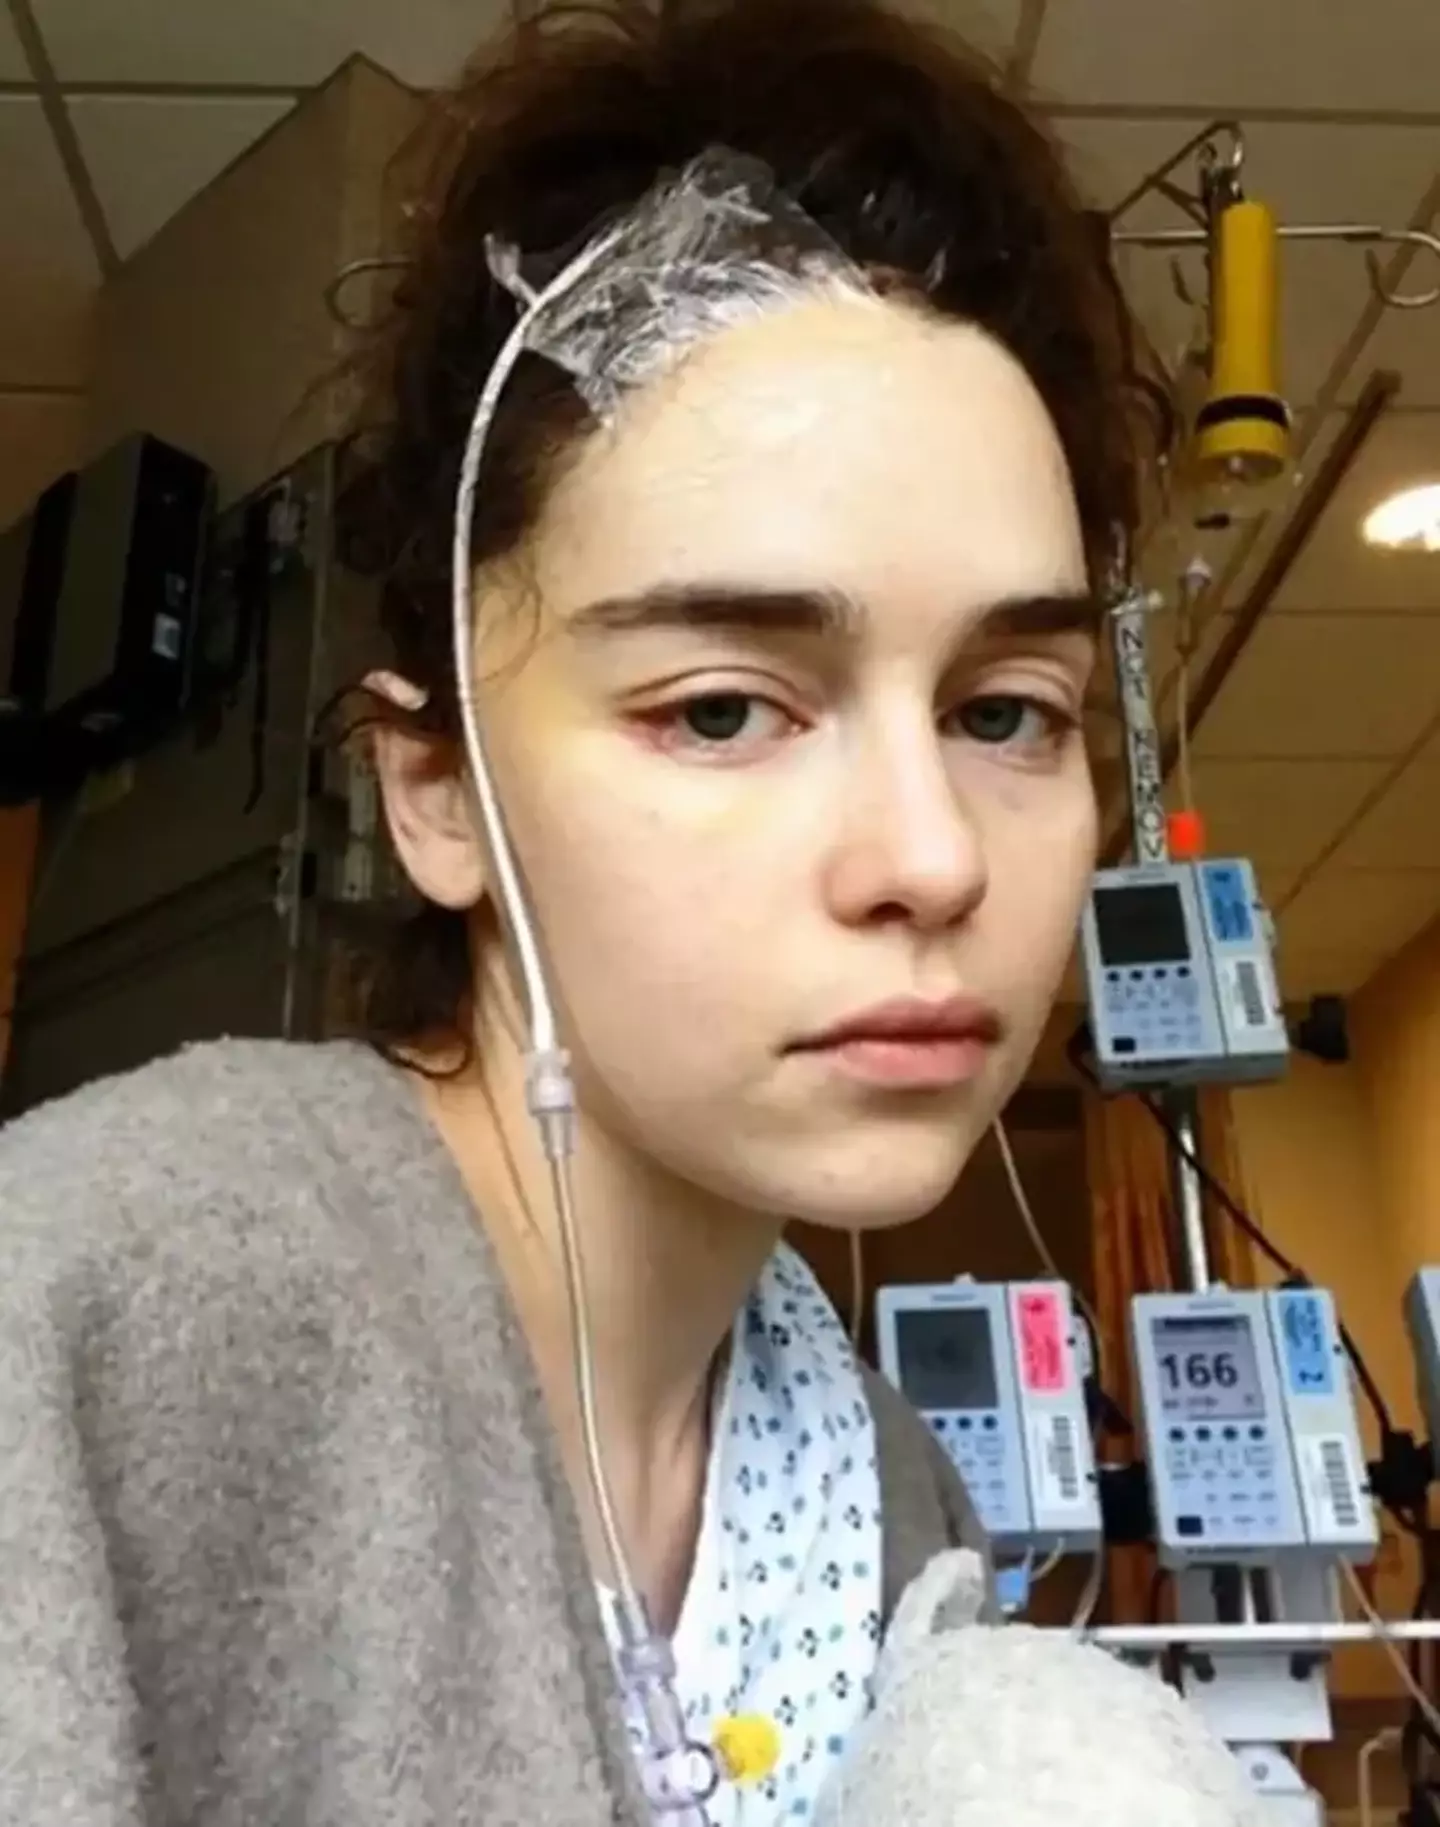 Emilia Clarke suffered her first aneurysm in 2011.